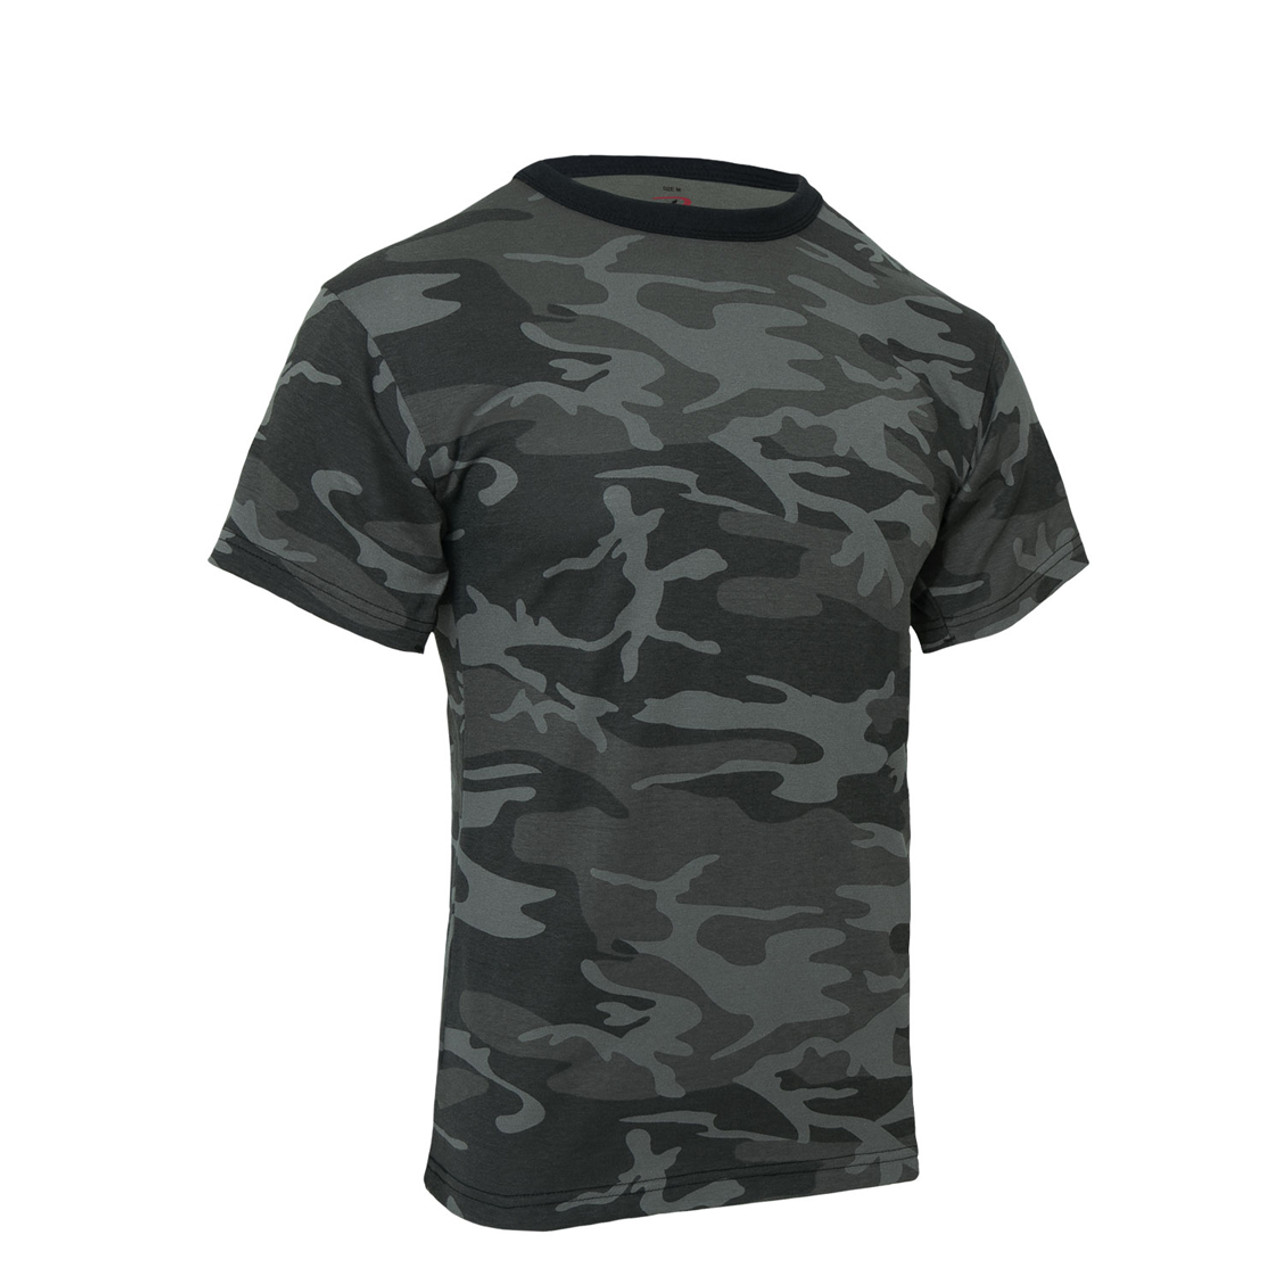 Black Gear Army Shop Shirts Camo Navy T Fatigues -